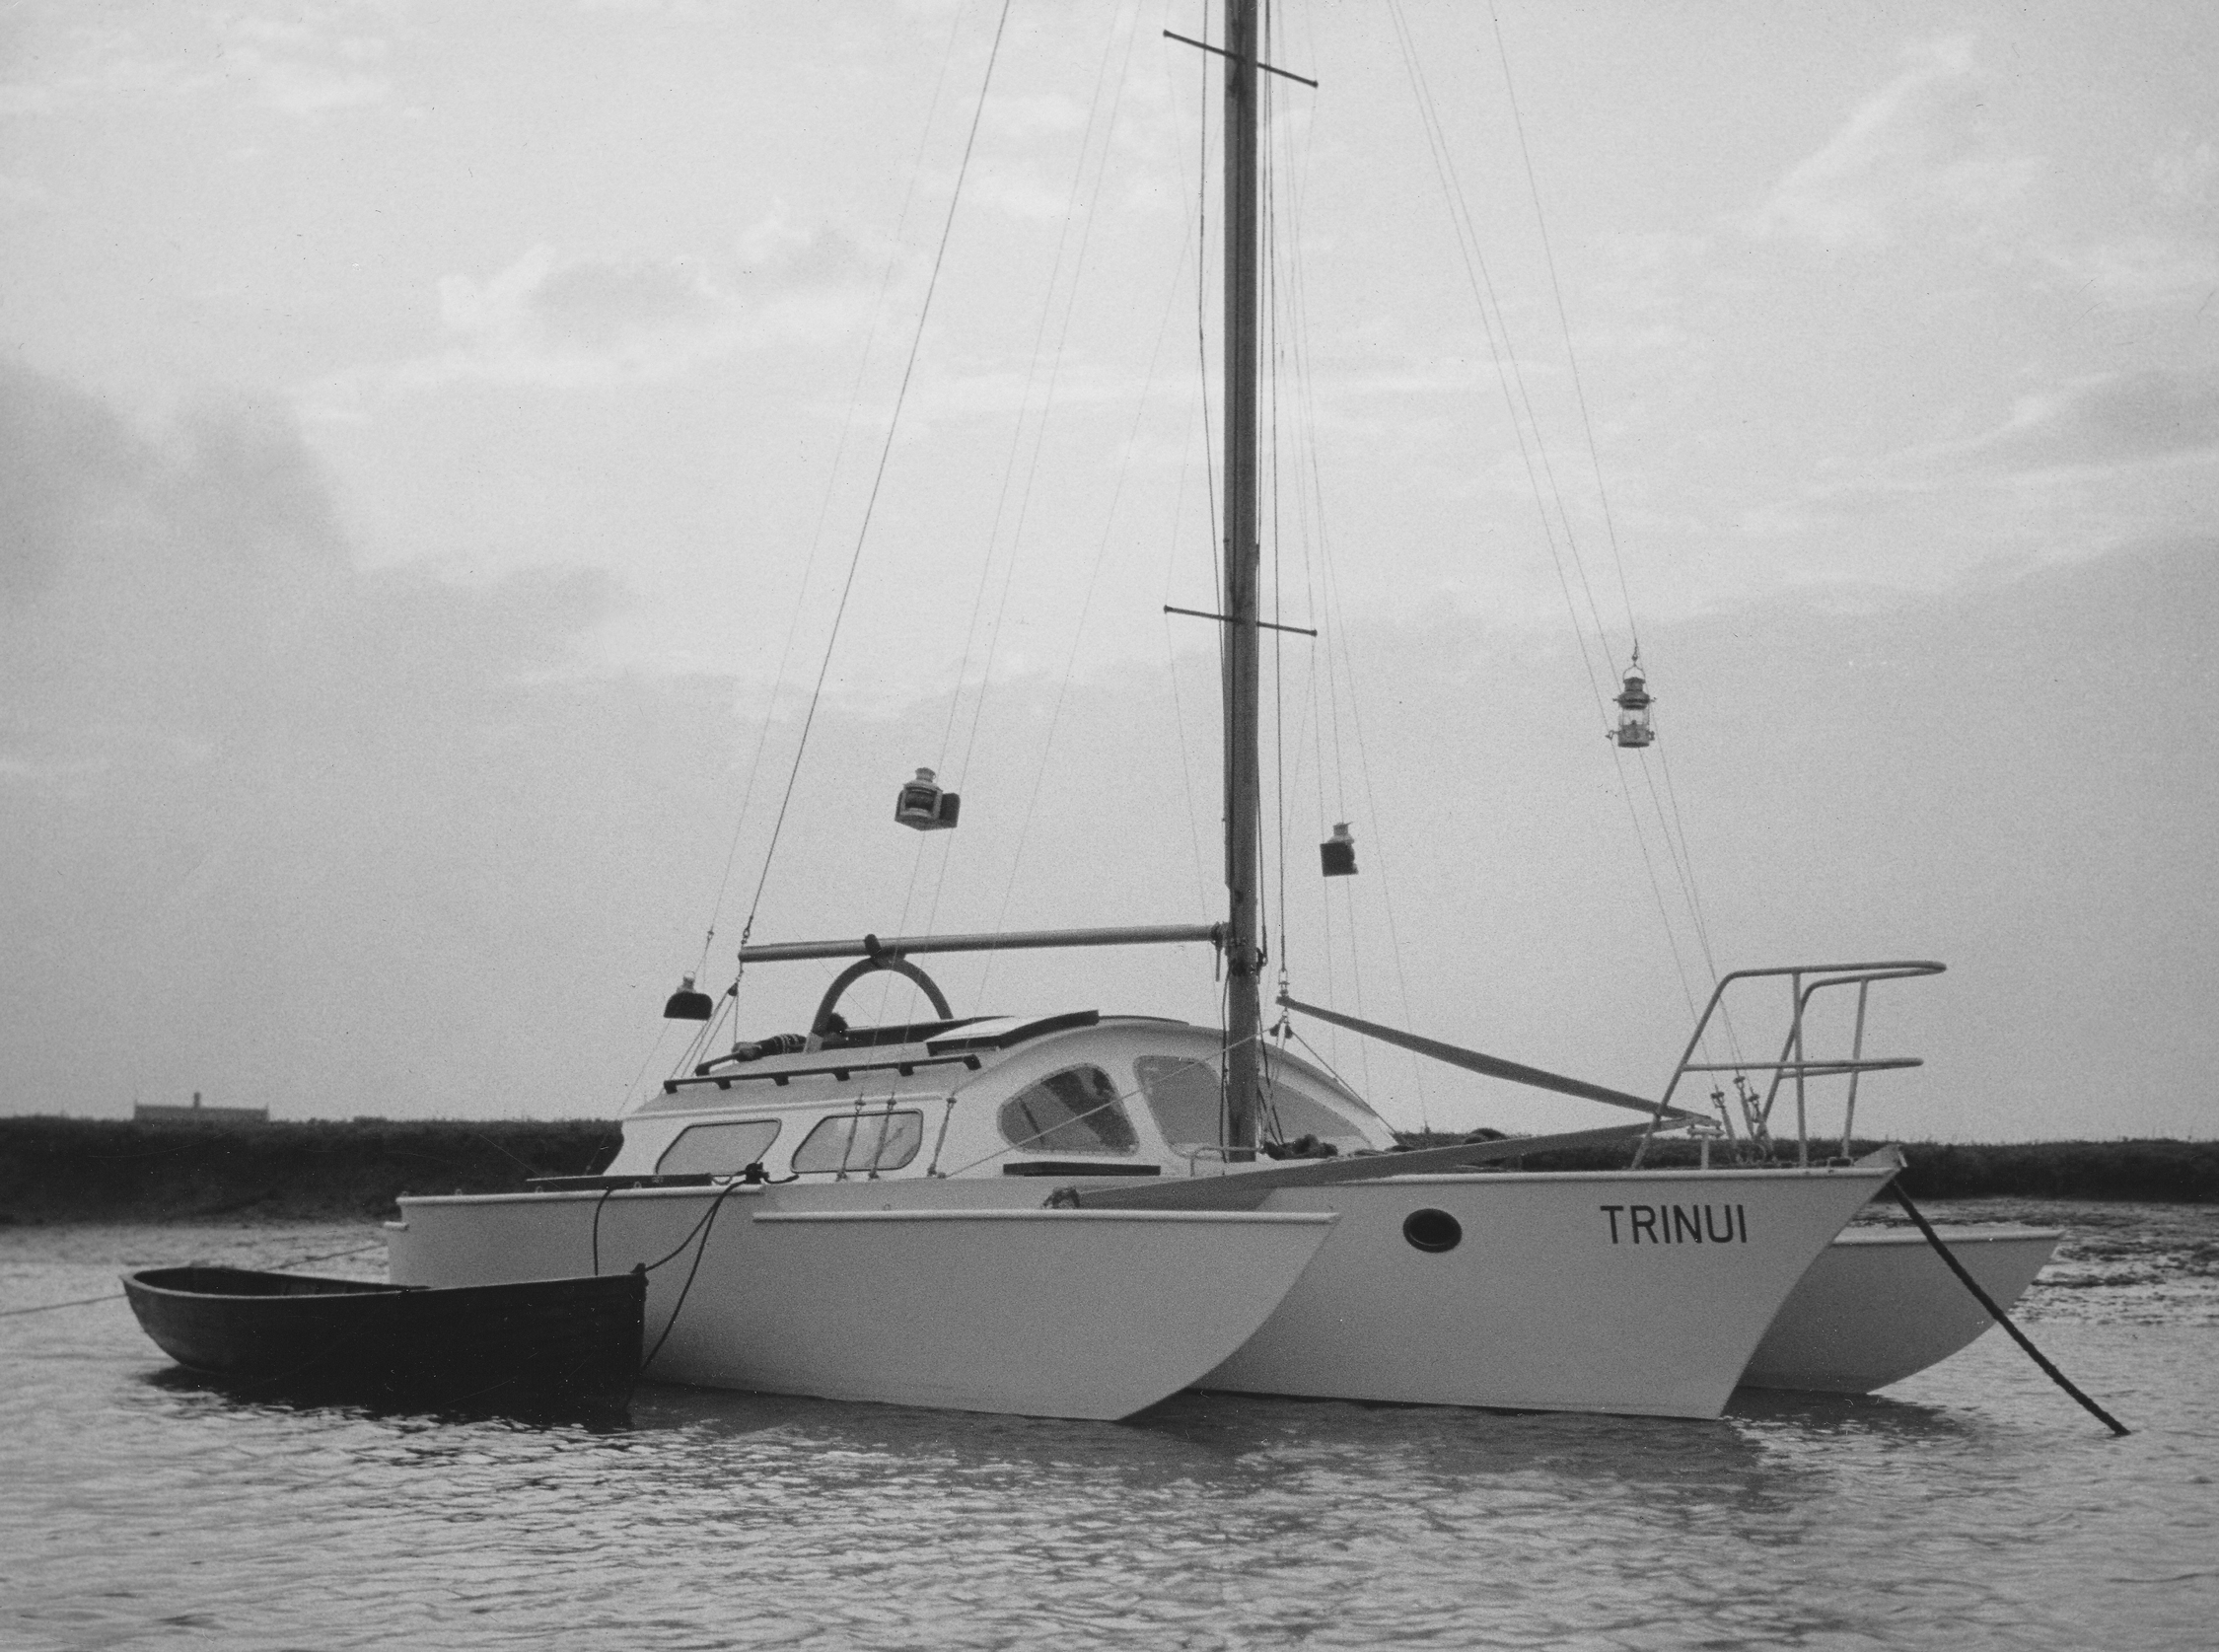 Trinui at anchor